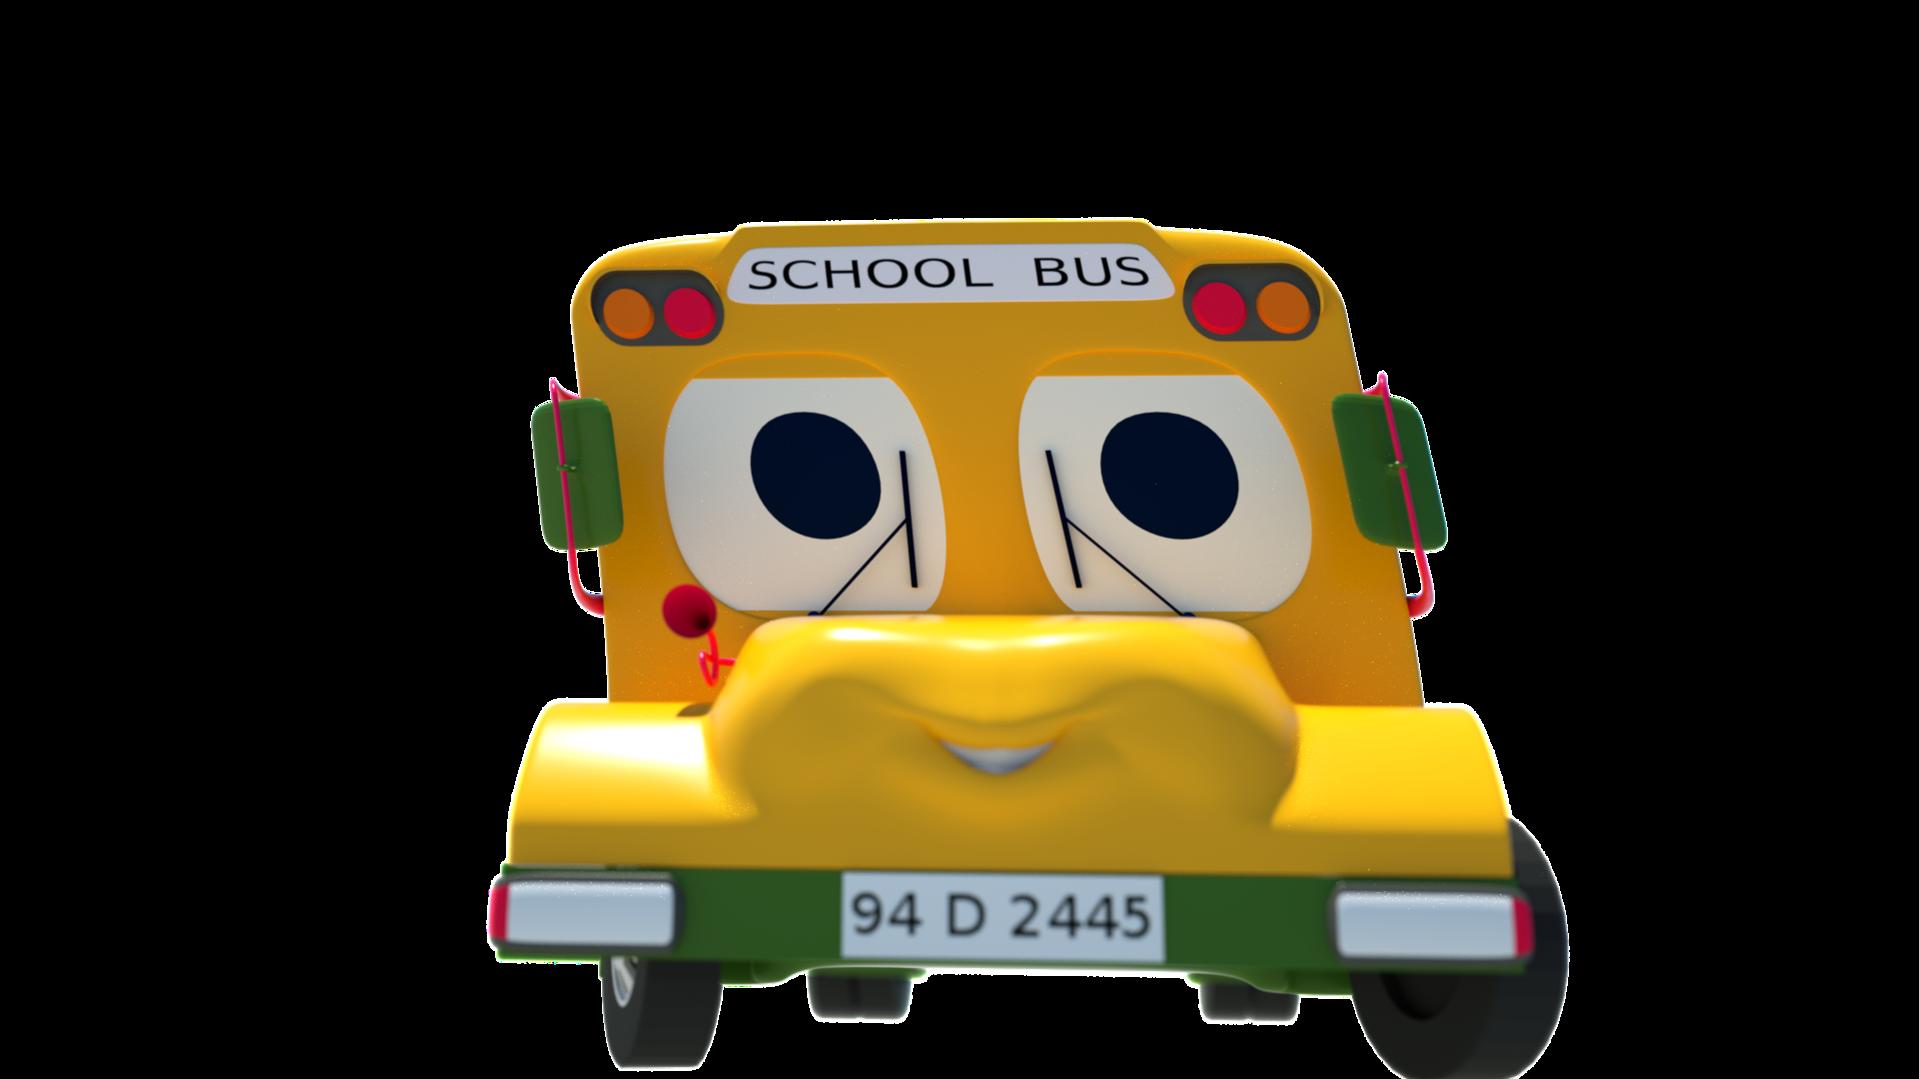 Wheels On The Bus (School Version)